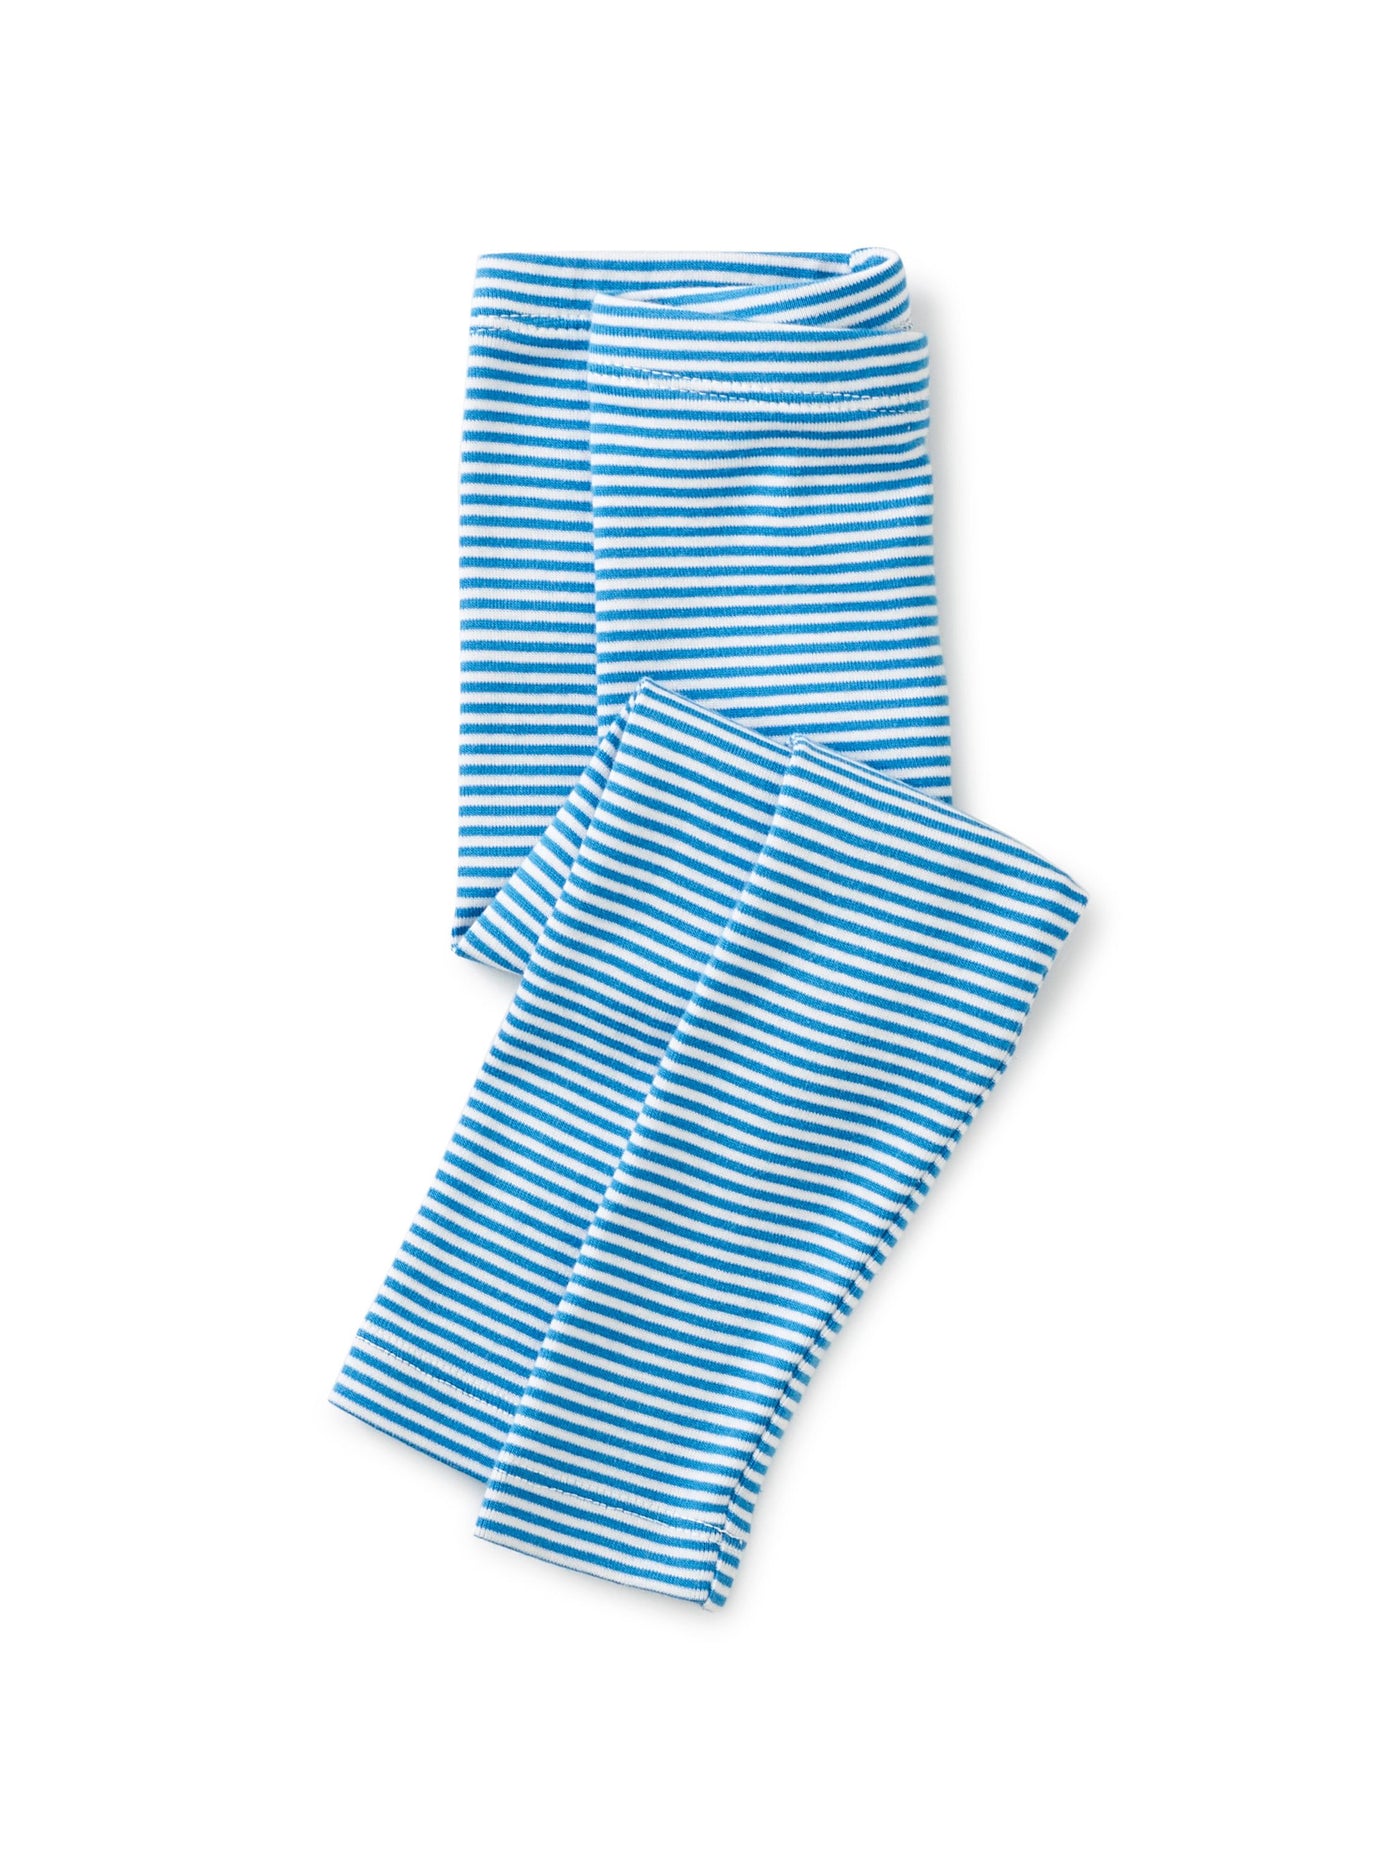 Striped Baby Leggings/Blue Aster